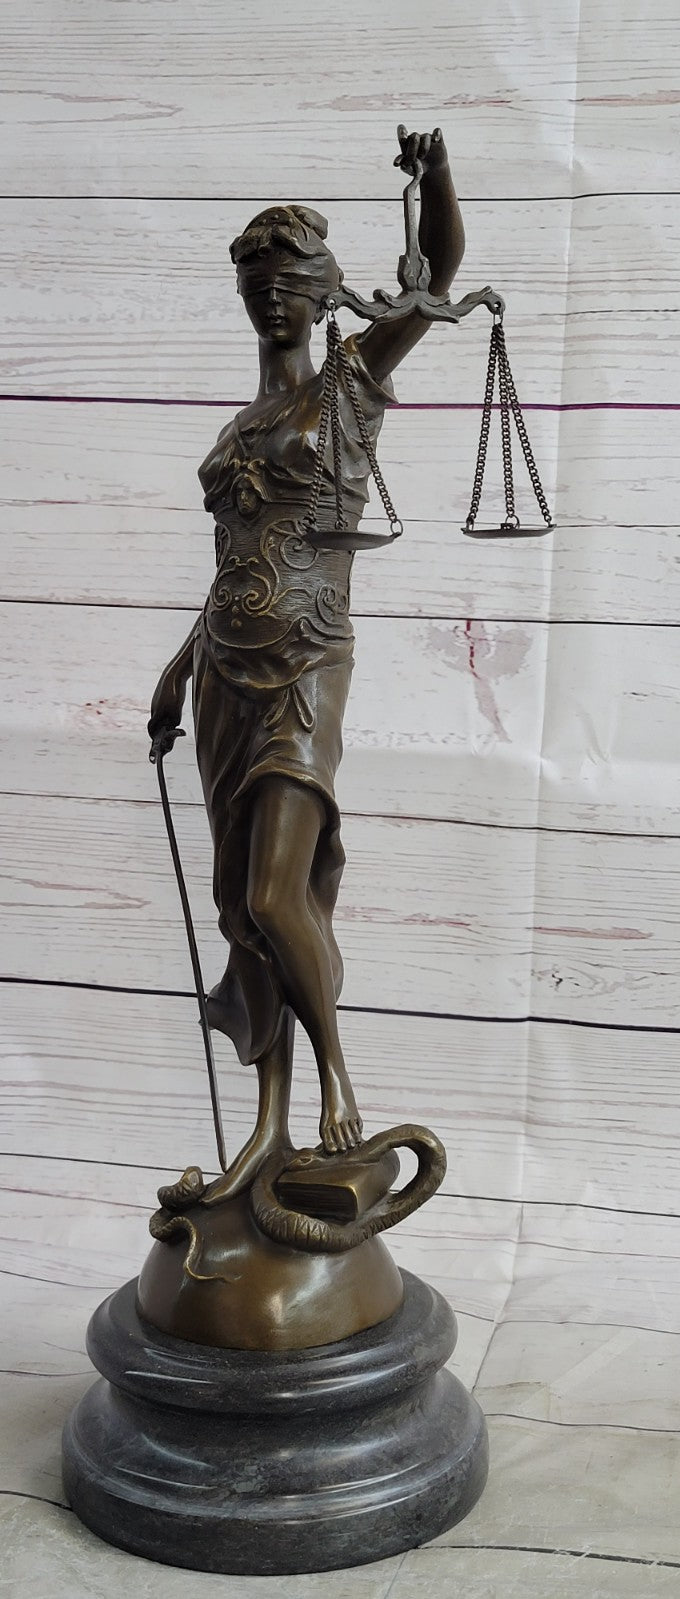 18" Tall BRONZE BLIND JUSTICE LAW MARBLE STATUE LADY SCALE Sculpture Nouveau Art